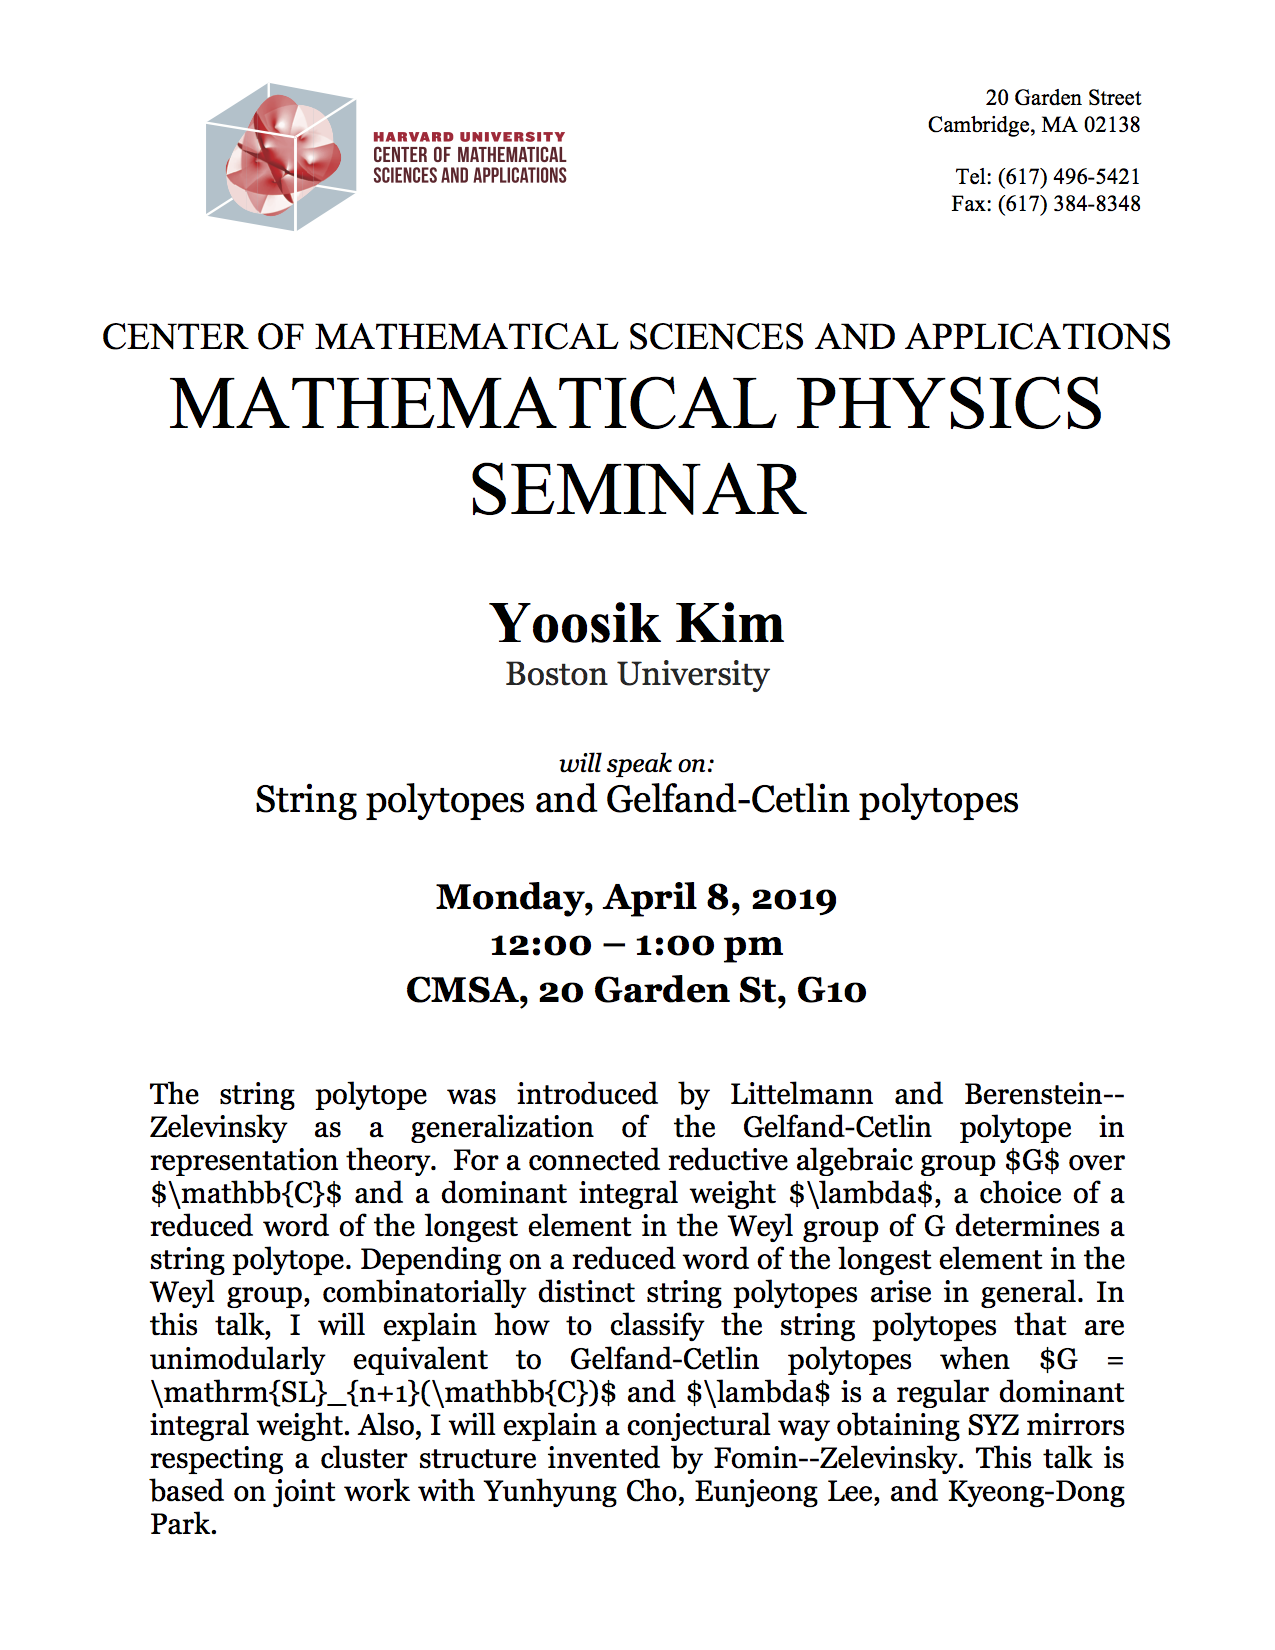 Mathematical Physics Seminar